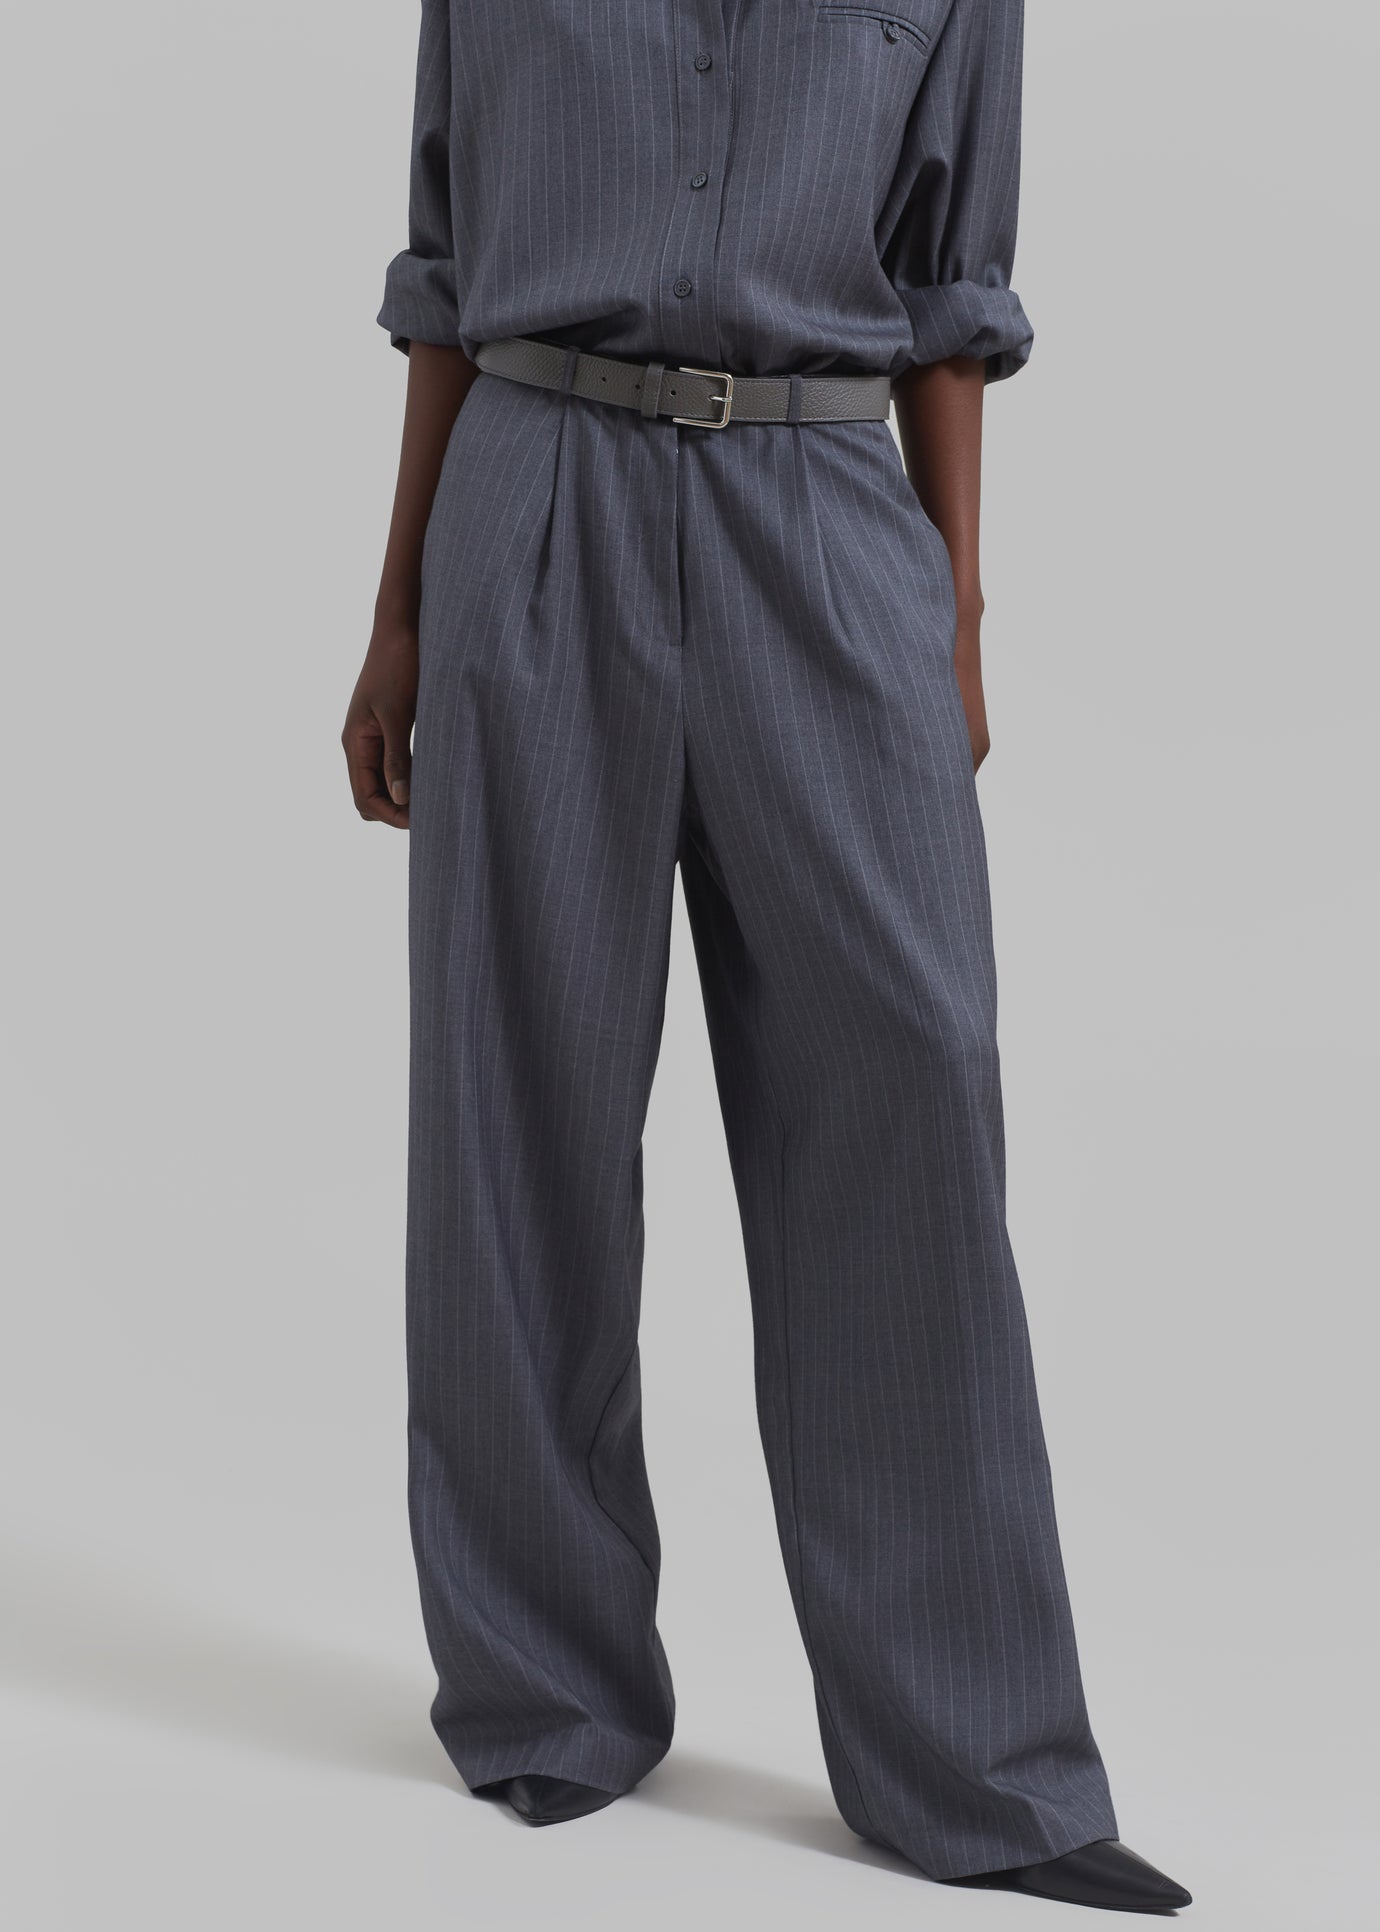 Kerry Trousers - Grey Pinstripe - 1